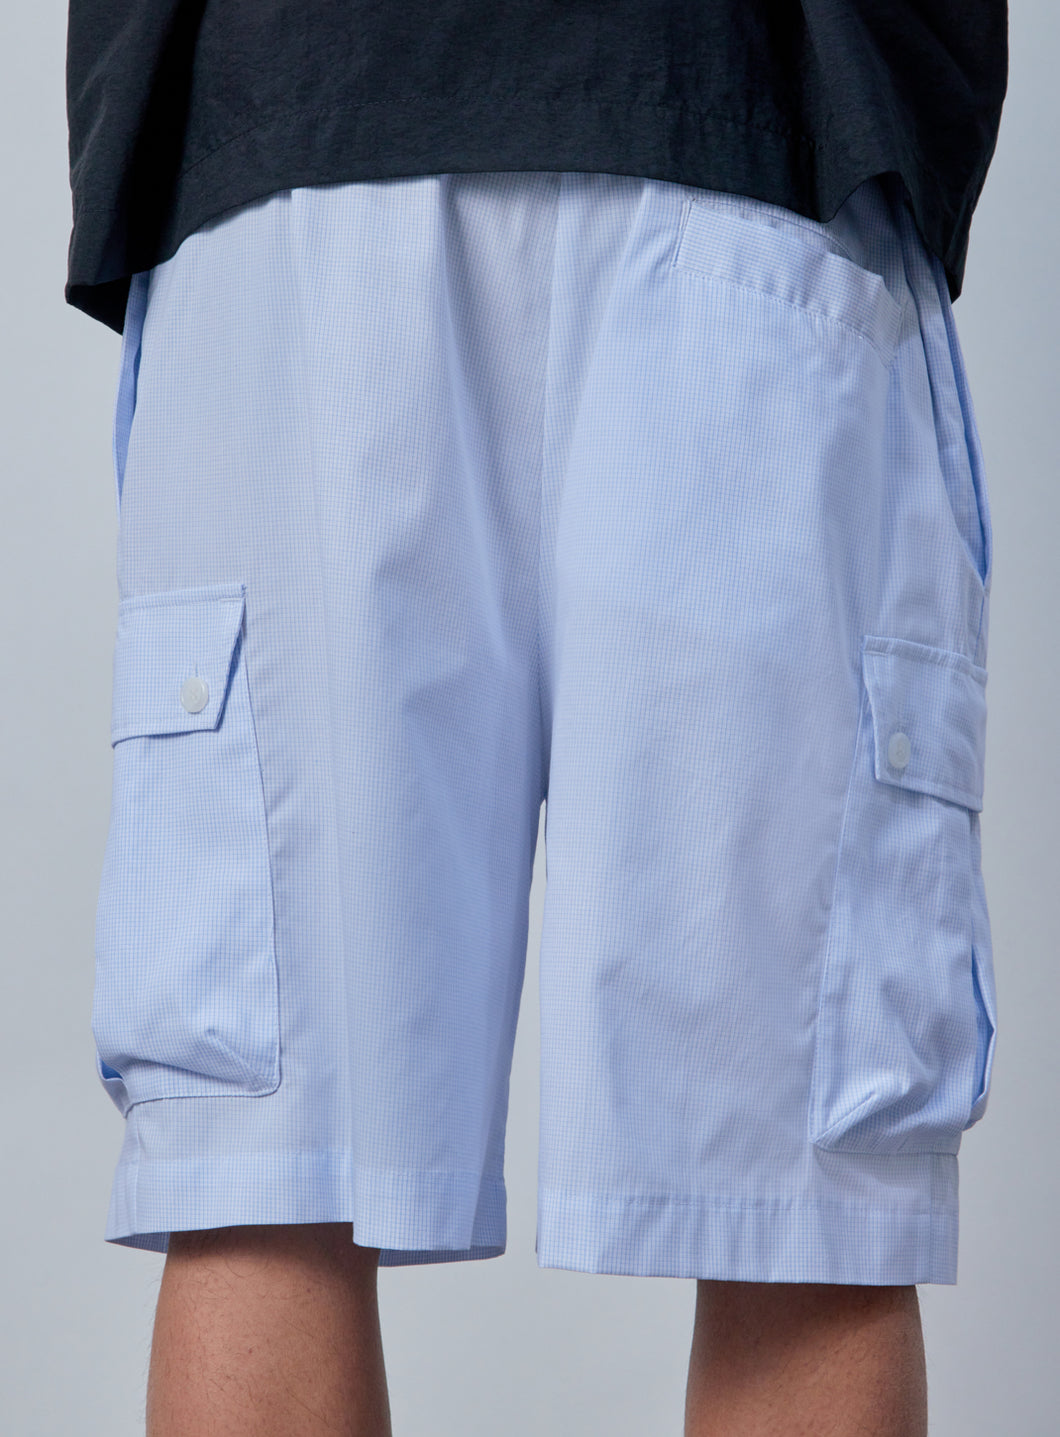 Bermuda Pants with Envelope Pockets in White Poplin with Sky Blue Mini Checks